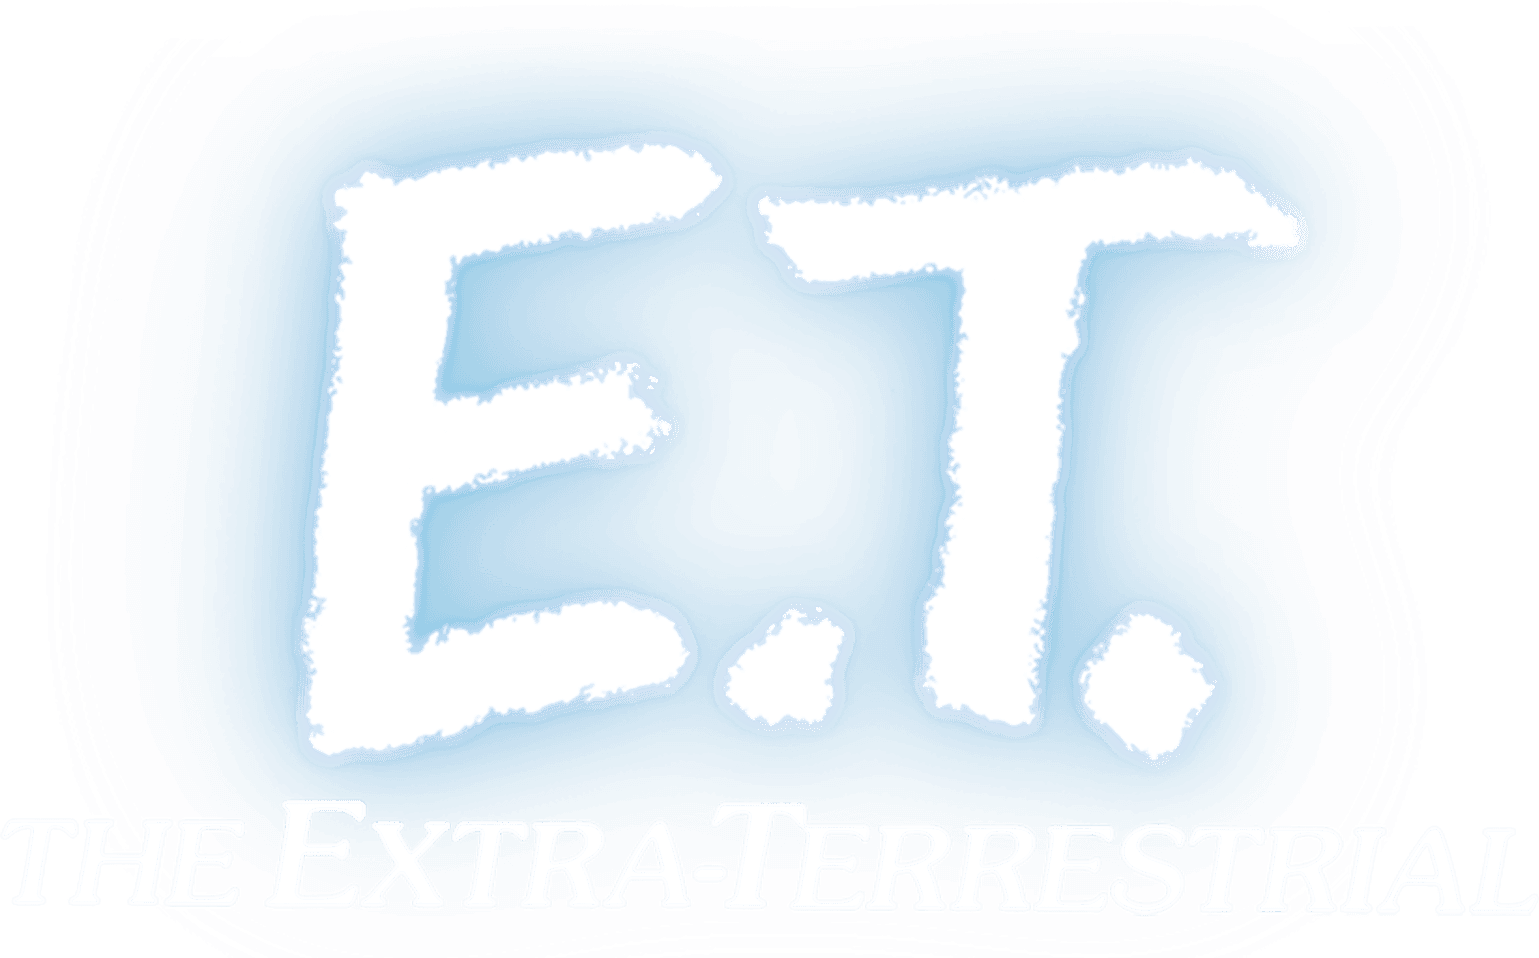 E.T. the Extra-Terrestrial logo